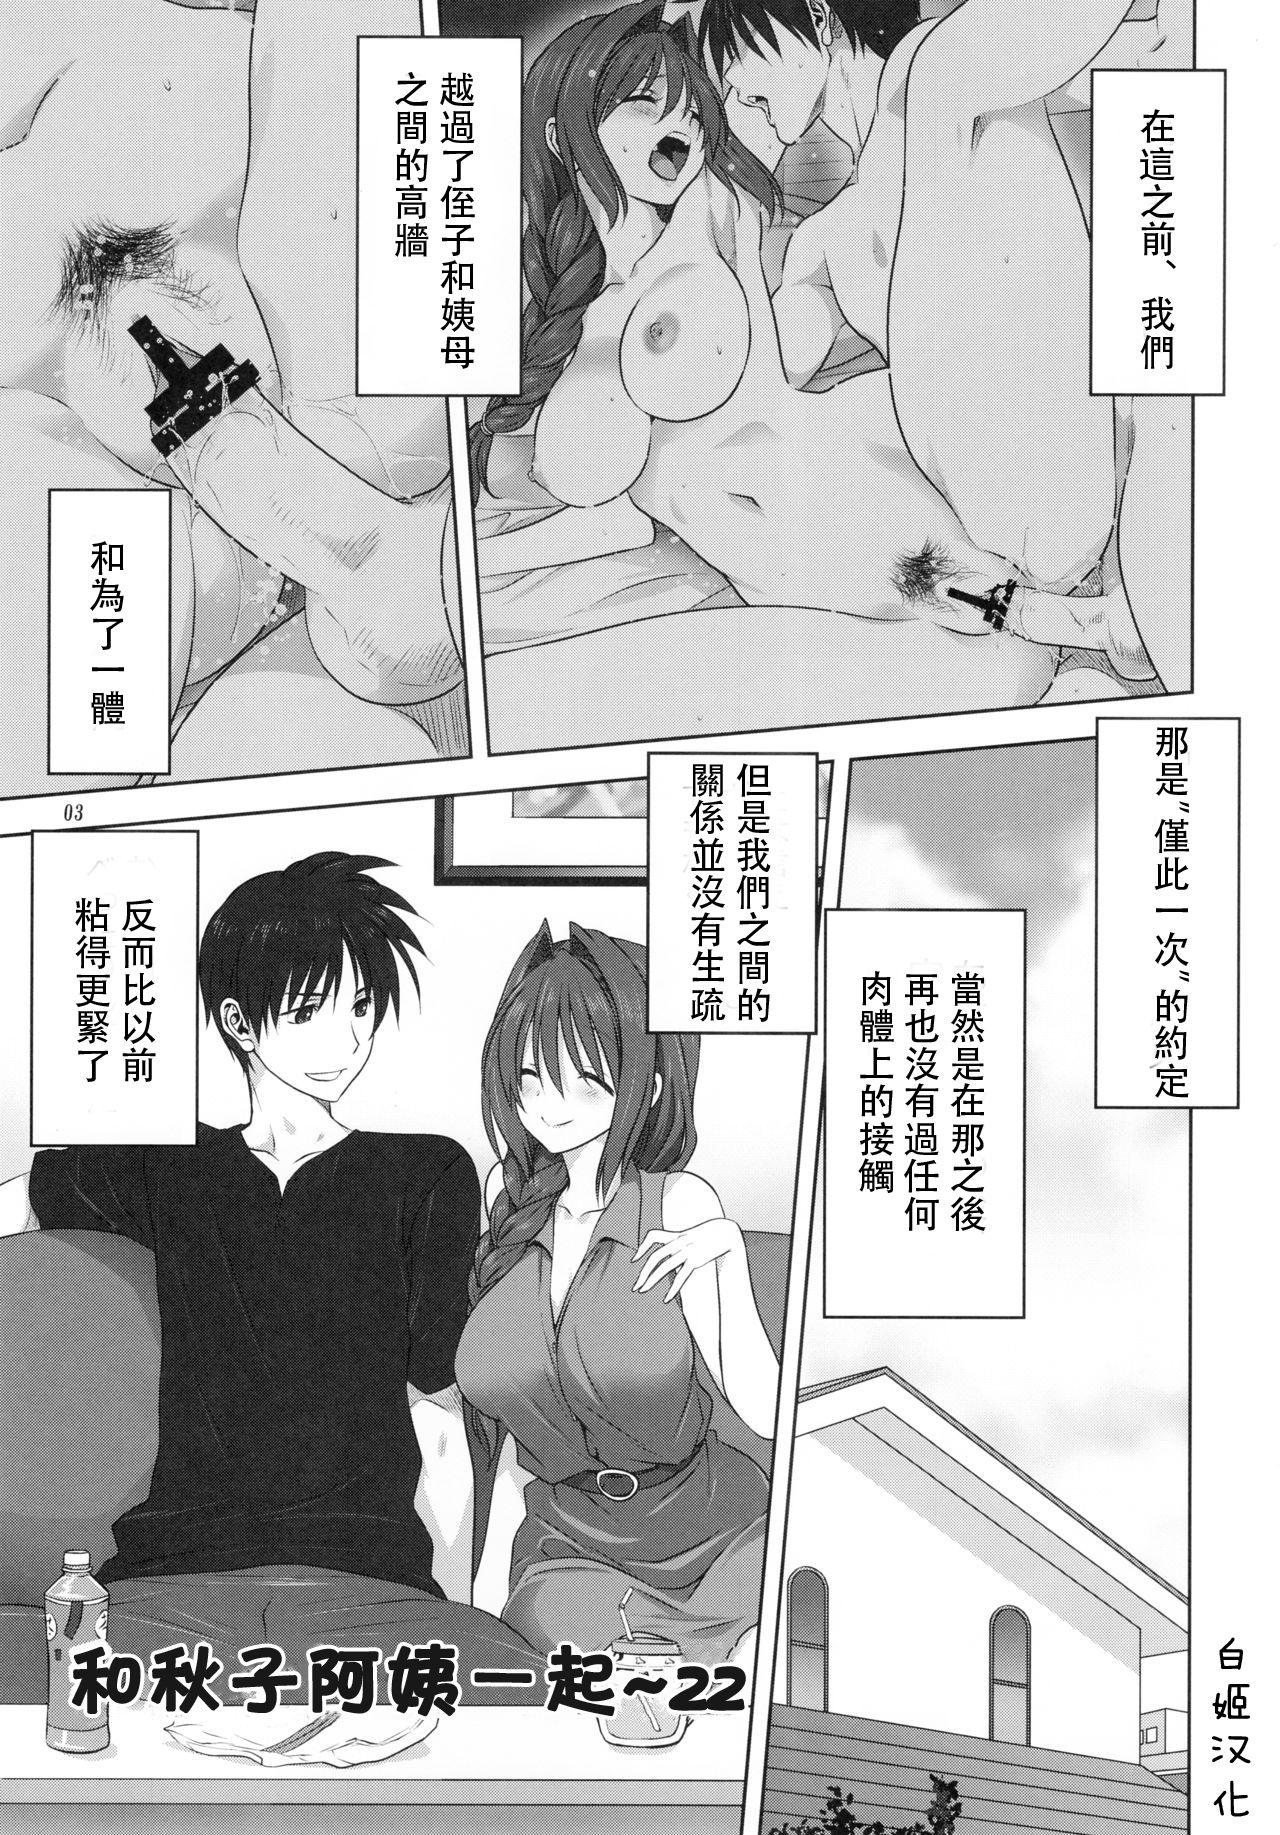 Passivo Akiko-san to Issho 22 - Kanon Ass Fetish - Page 2